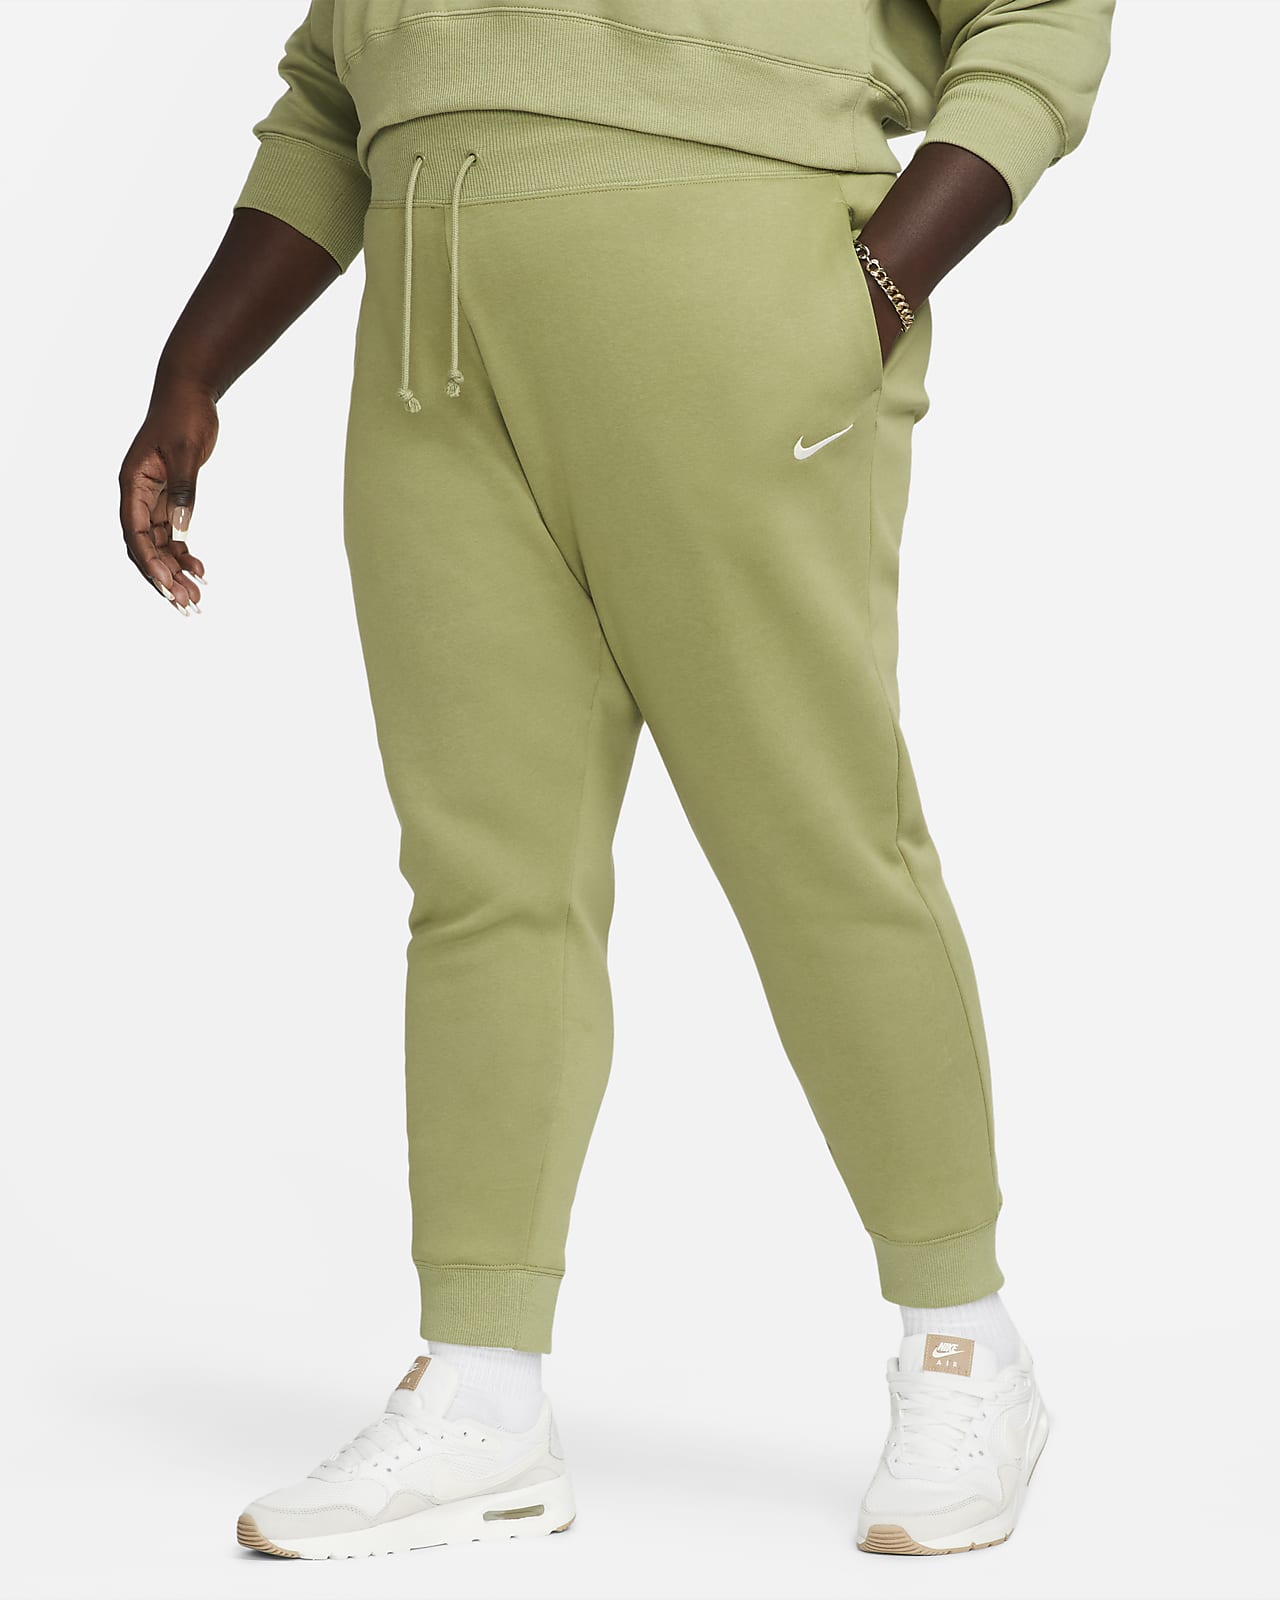 Pantalon de jogging taille haute Nike Sportswear Phoenix Fleece pour Femme (grande taille)